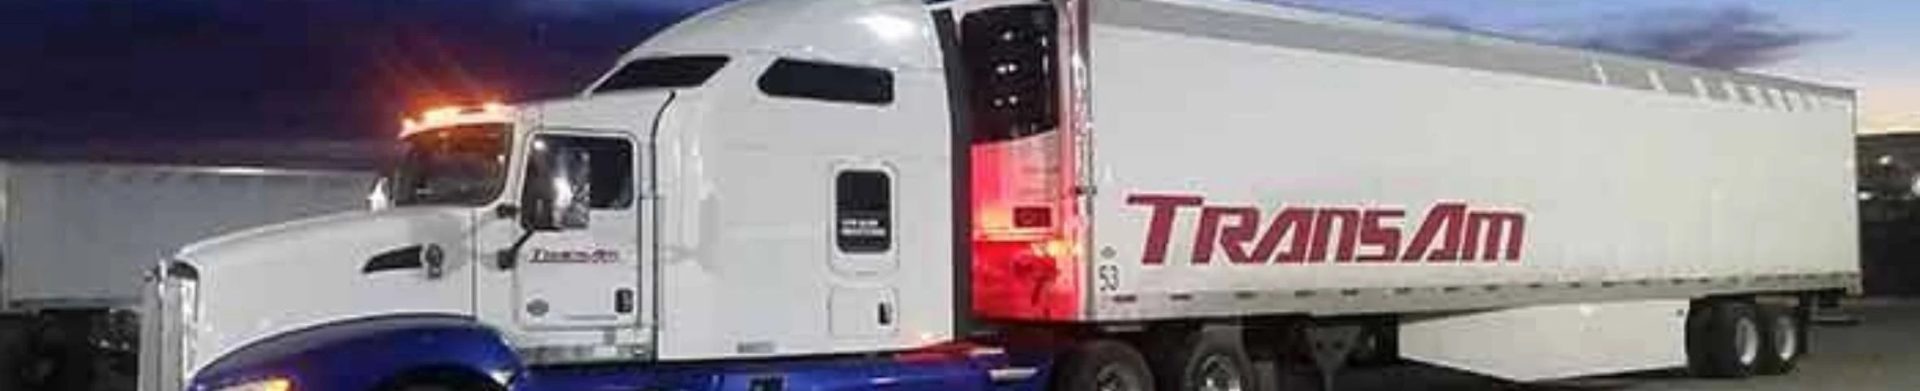 TransAm Trucking freight truck during nighttime